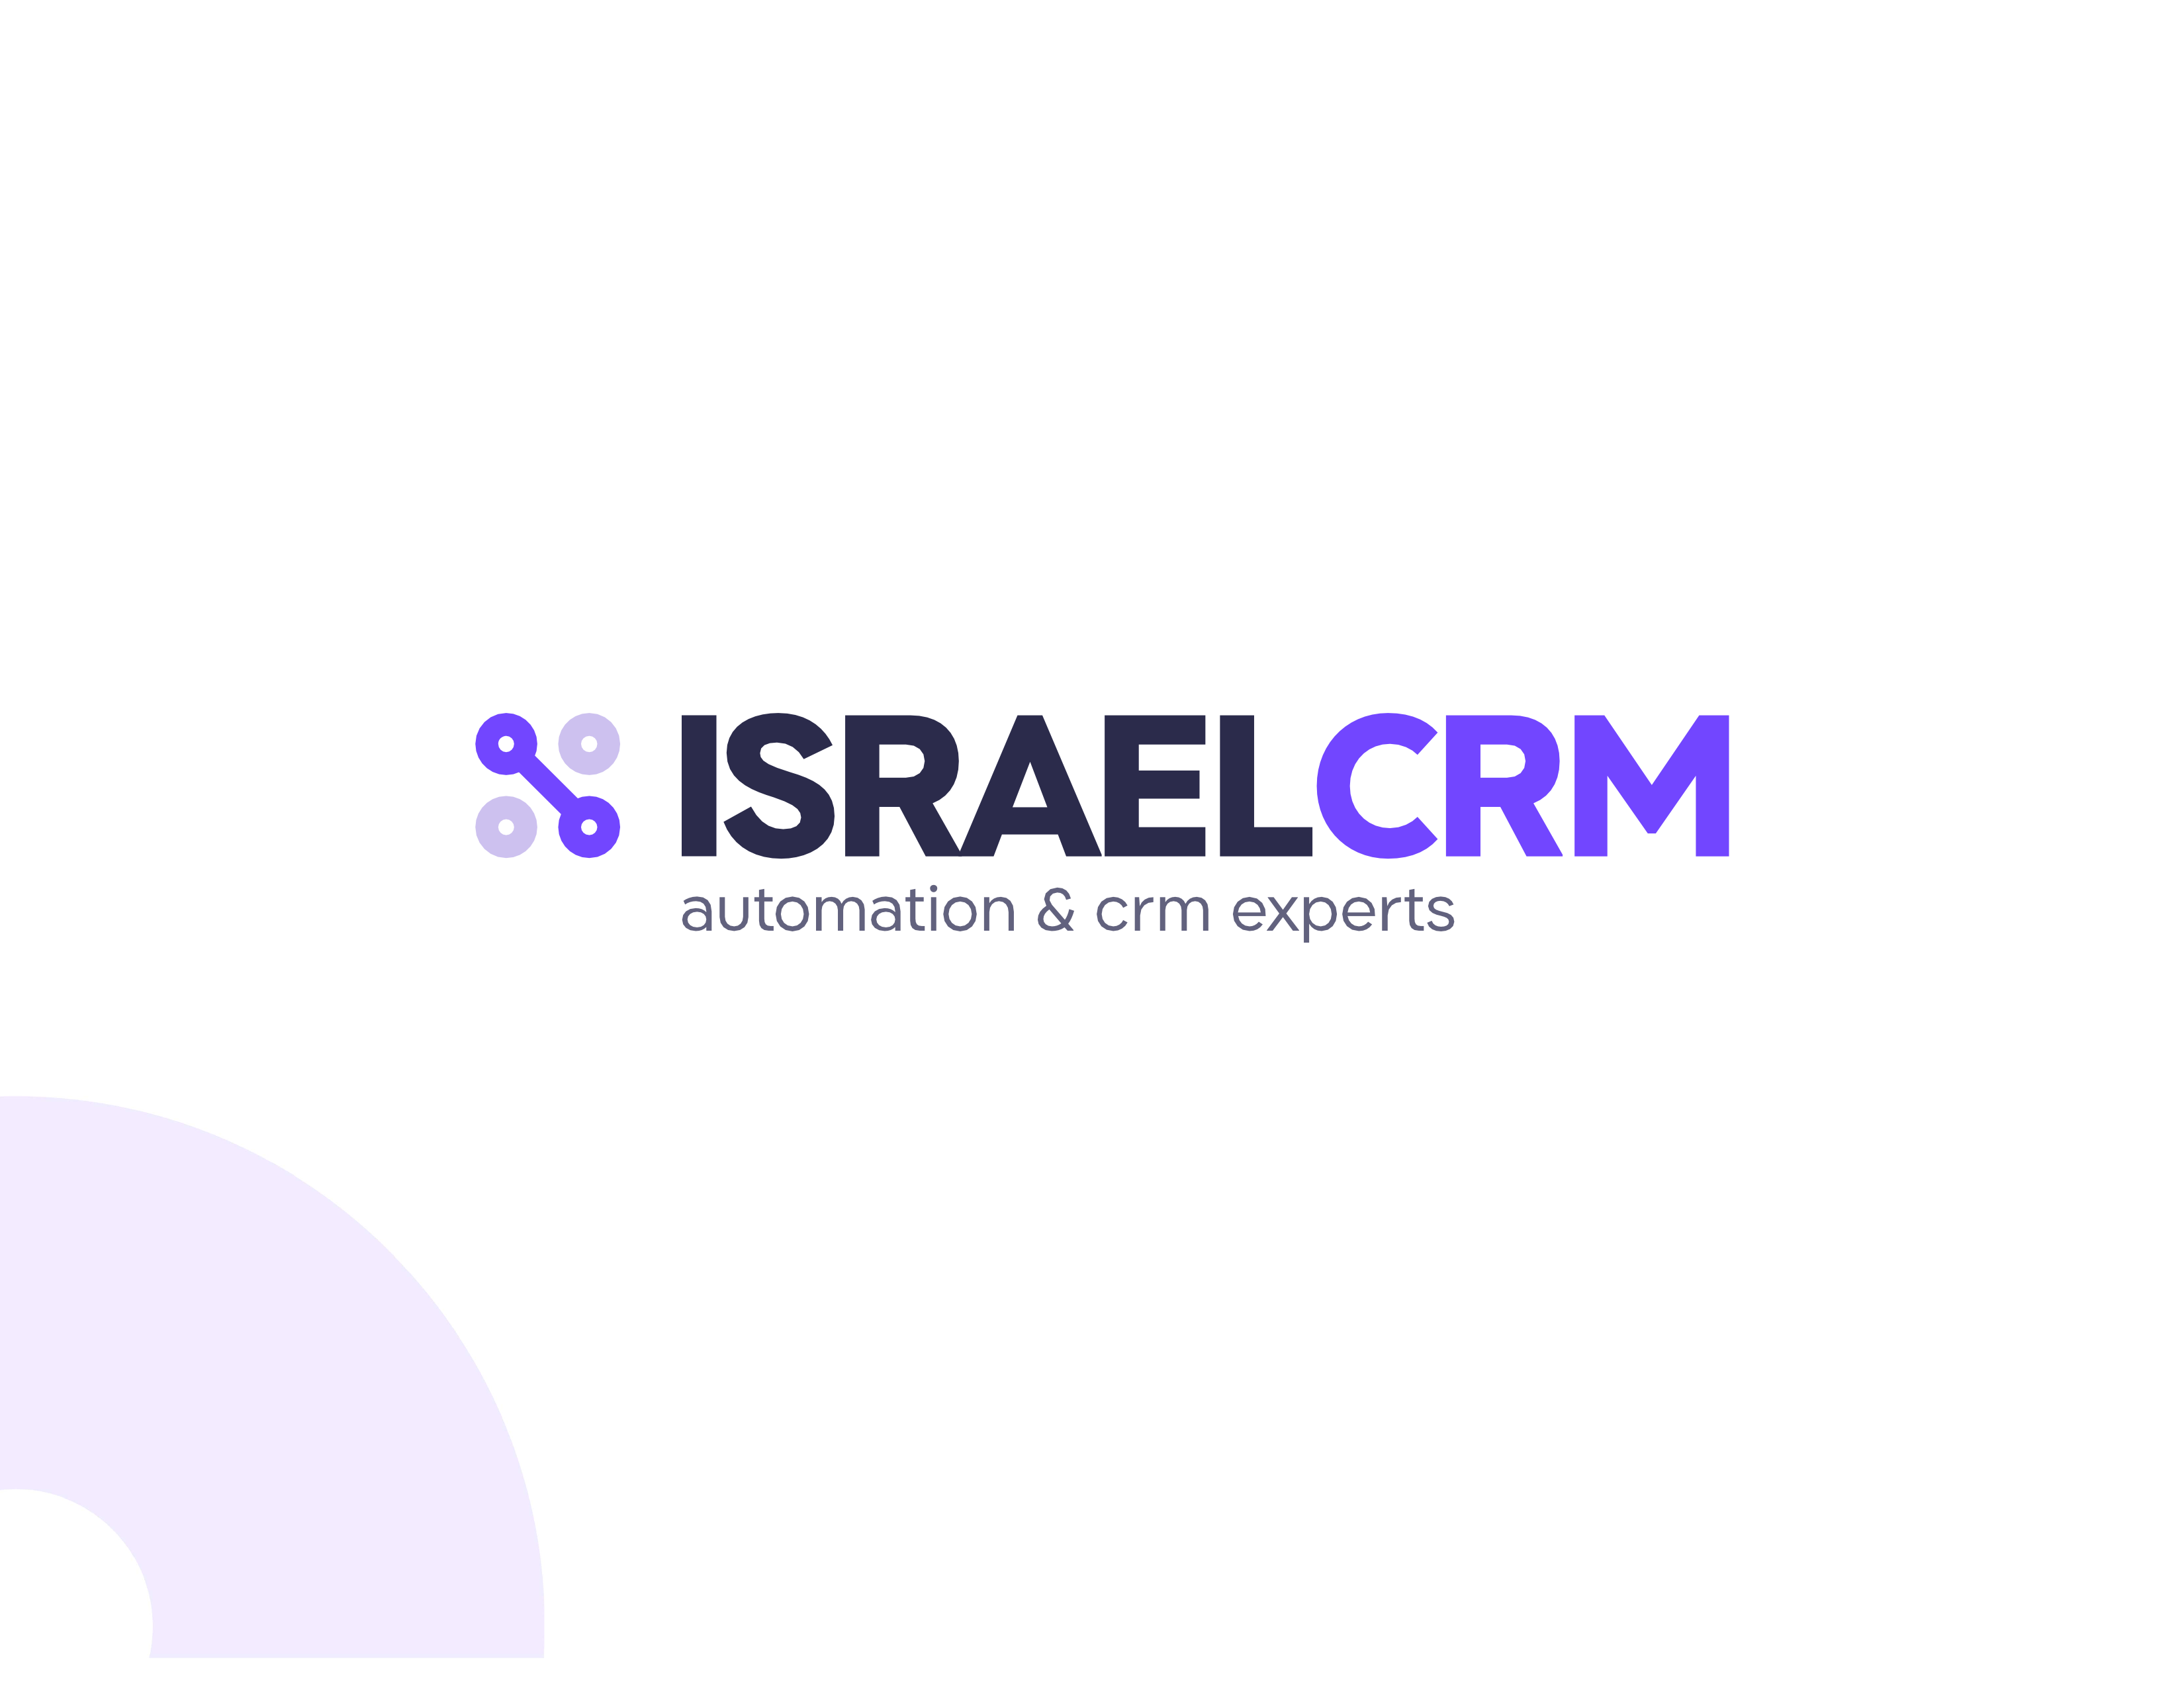 Israelcrm logo